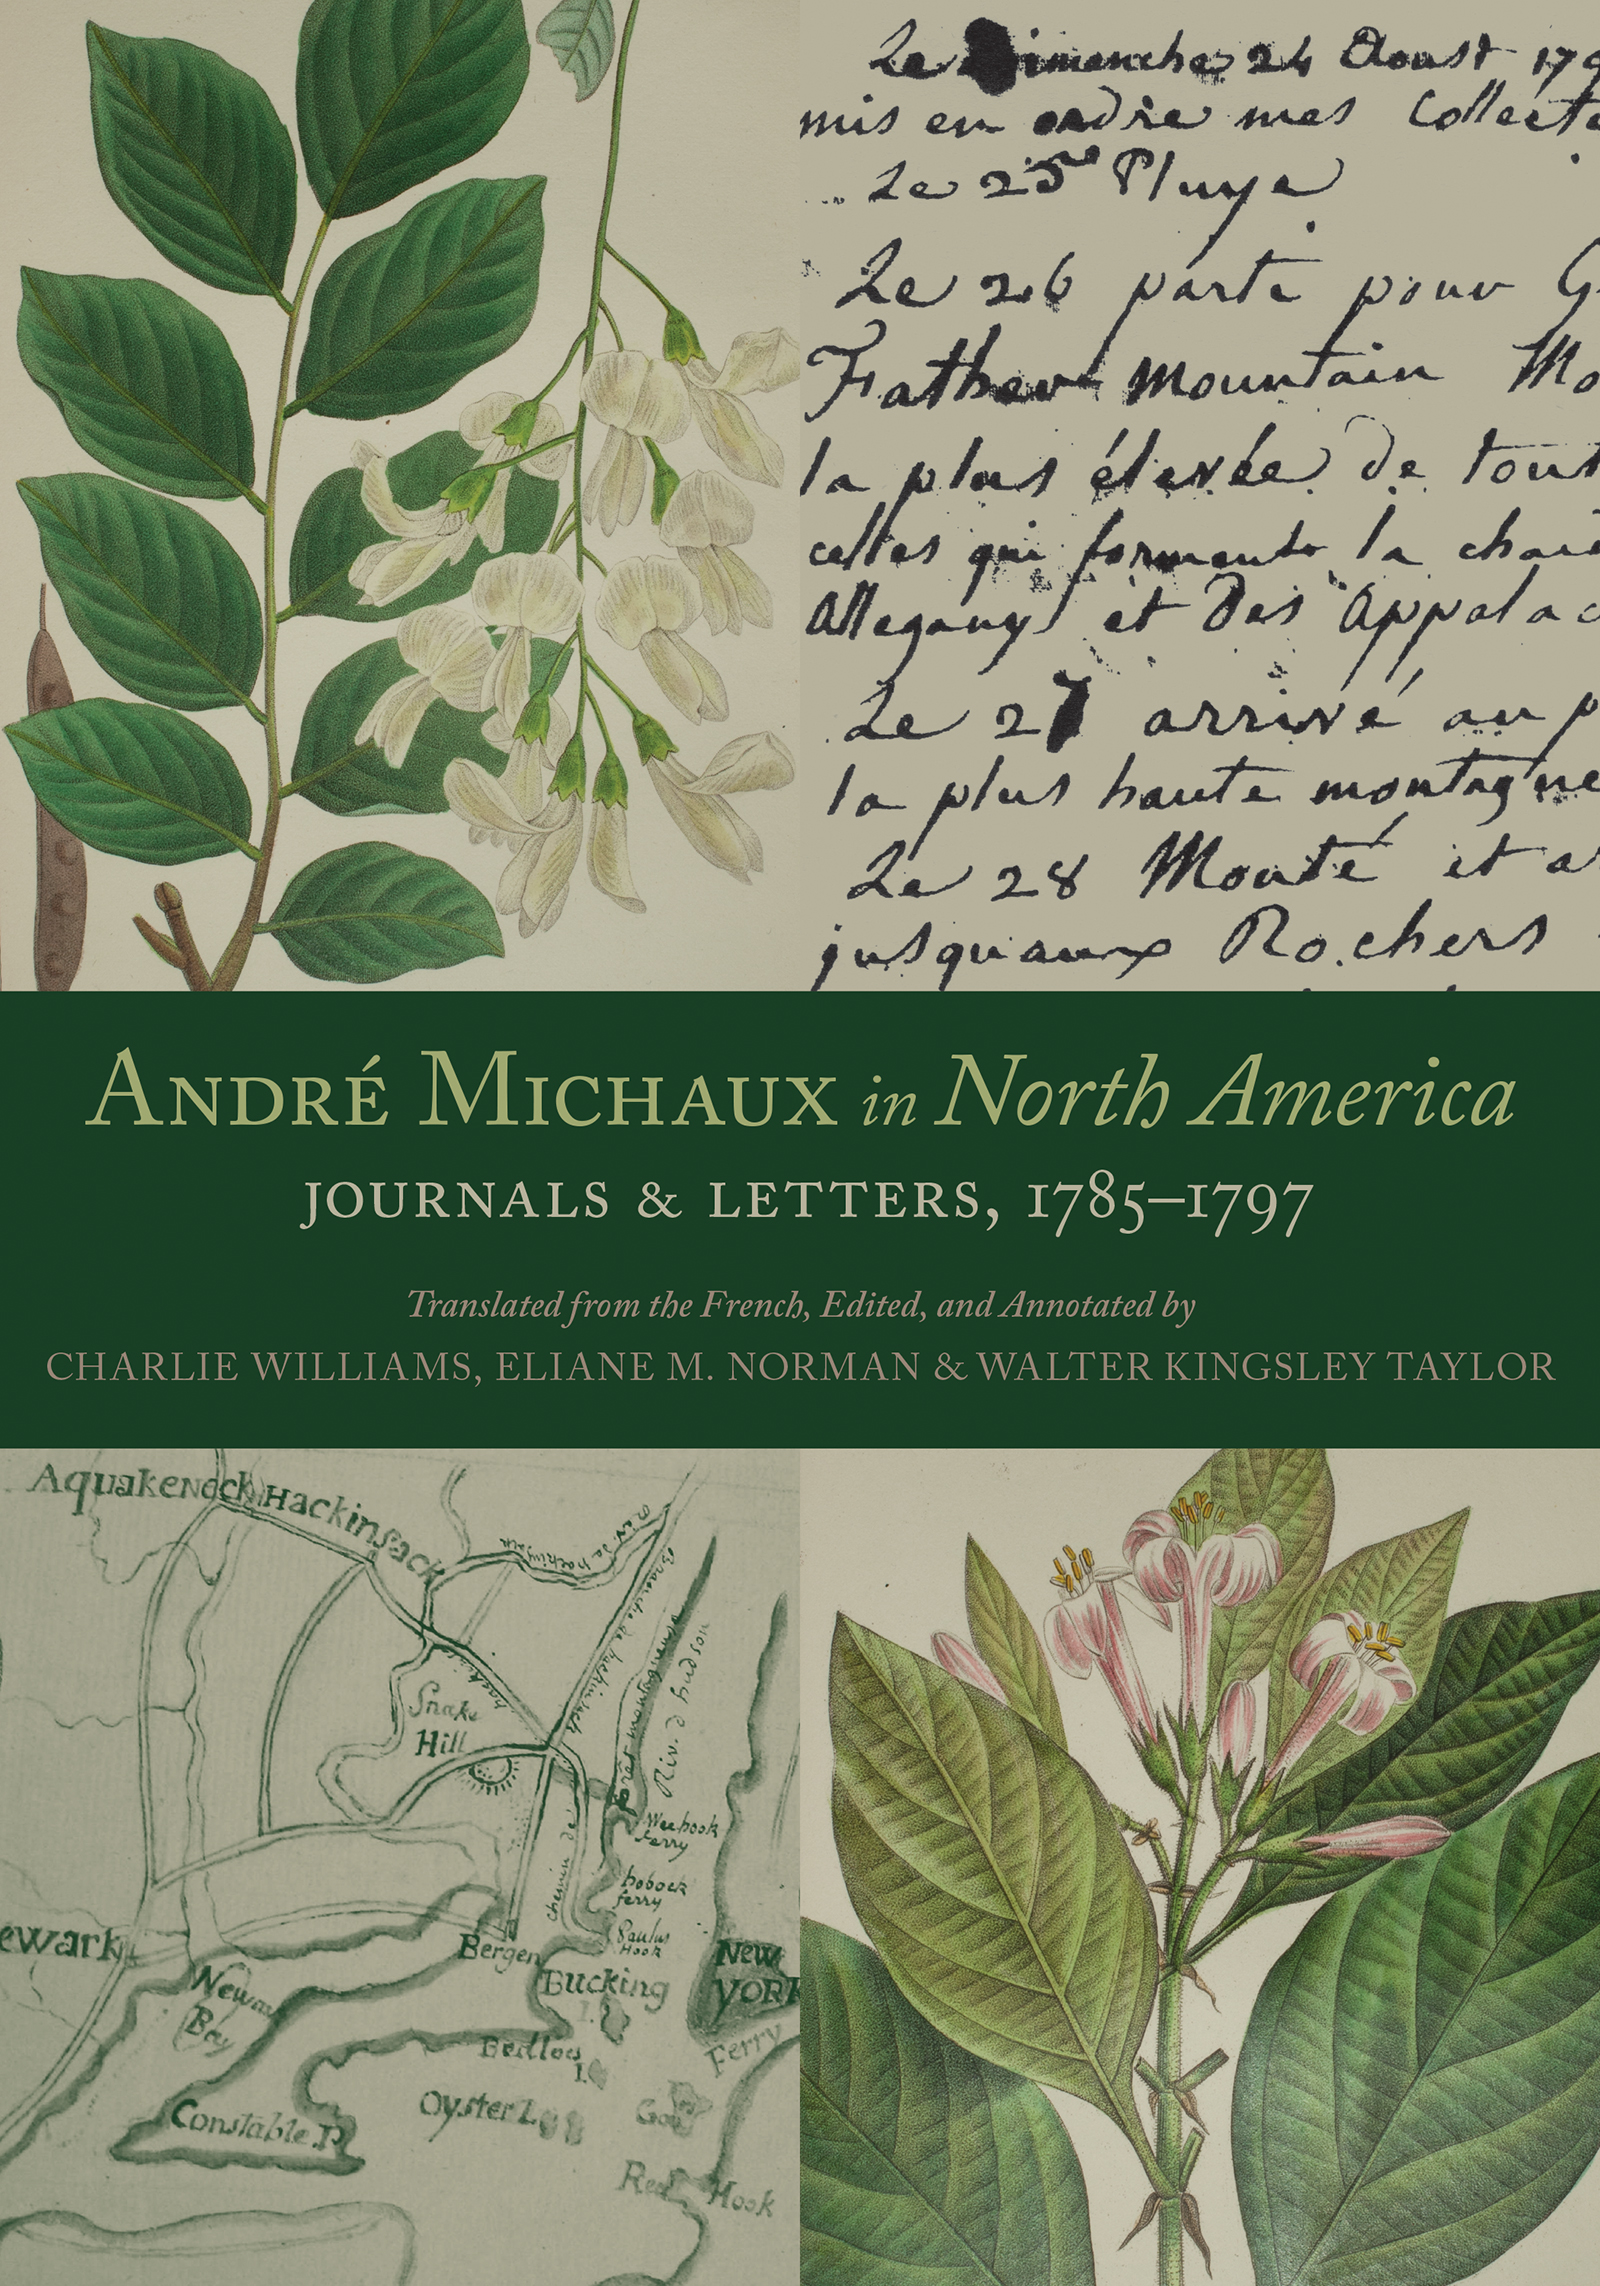 Cover of Botanical art techniques